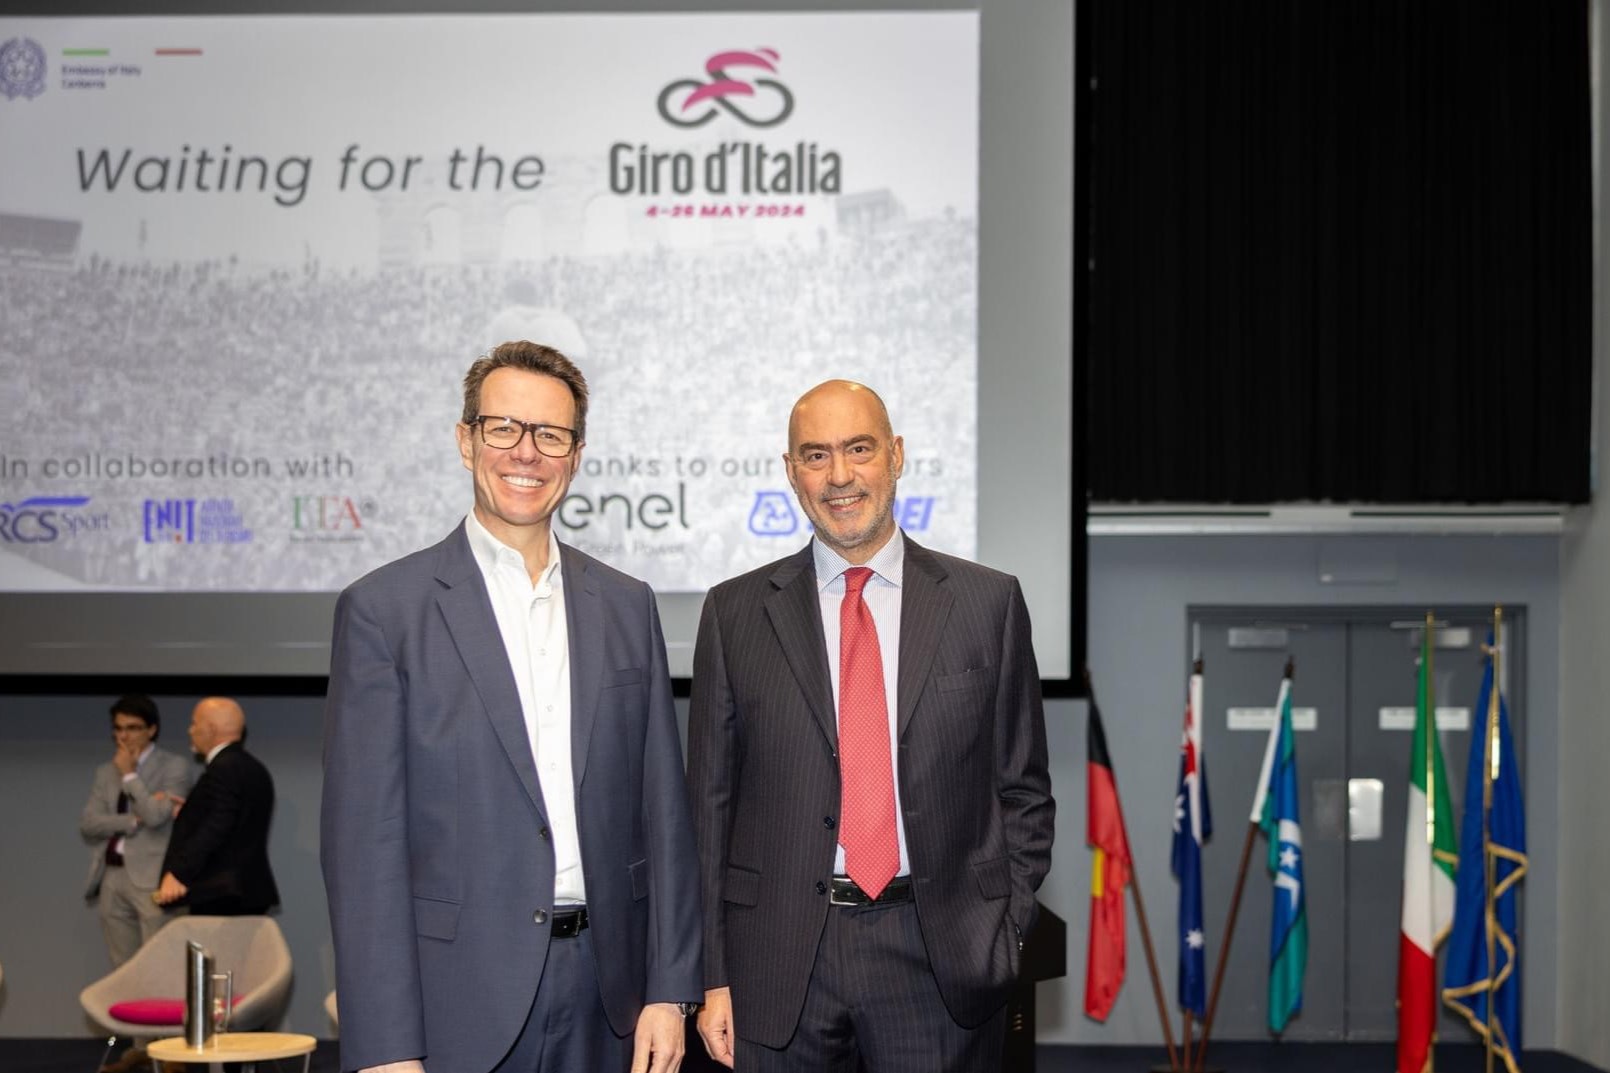 ASC CEO Kieren Perkins OAM and Italian Ambassador Paolo Crudele at the 'Waiting for the Giro d'Italia' event